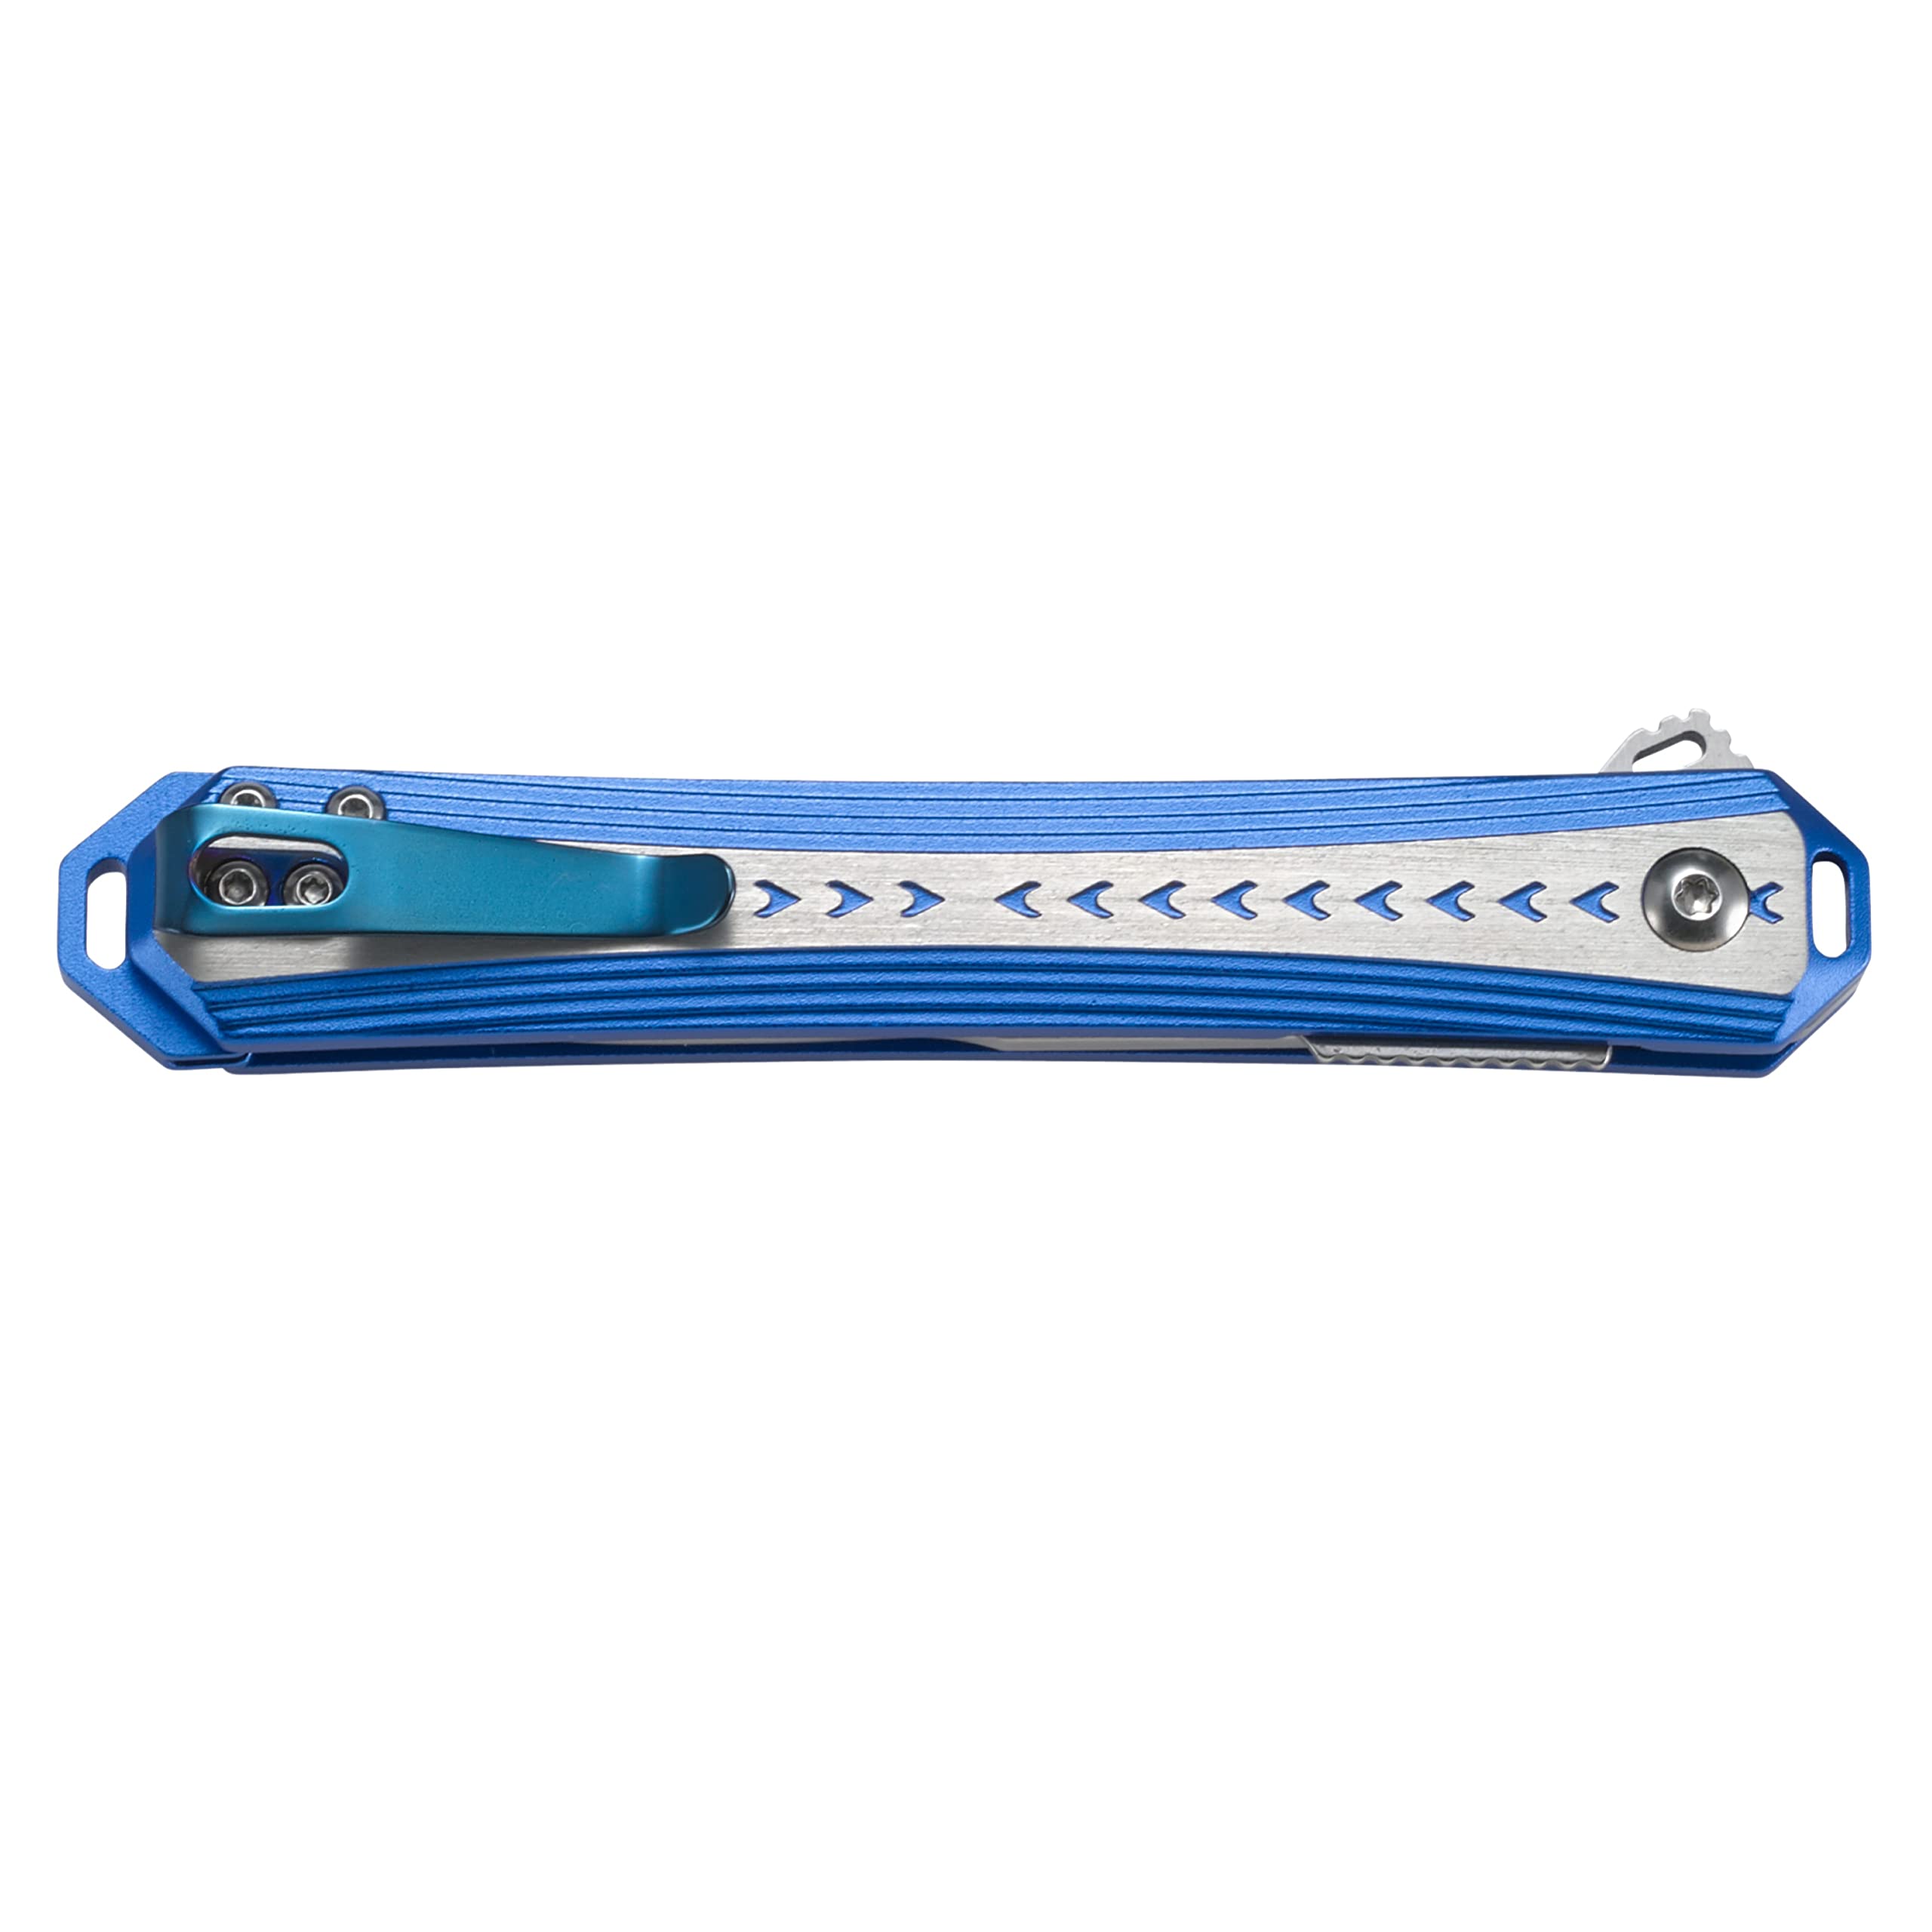 Columbia River Knife & Tool Stickler Folding Pocket Knife: Assisted Open Everyday Carry, Sandvik 12C27 Plain Edge Blade, Liner Lock, Aluminum Handle 6710, Blue & silver